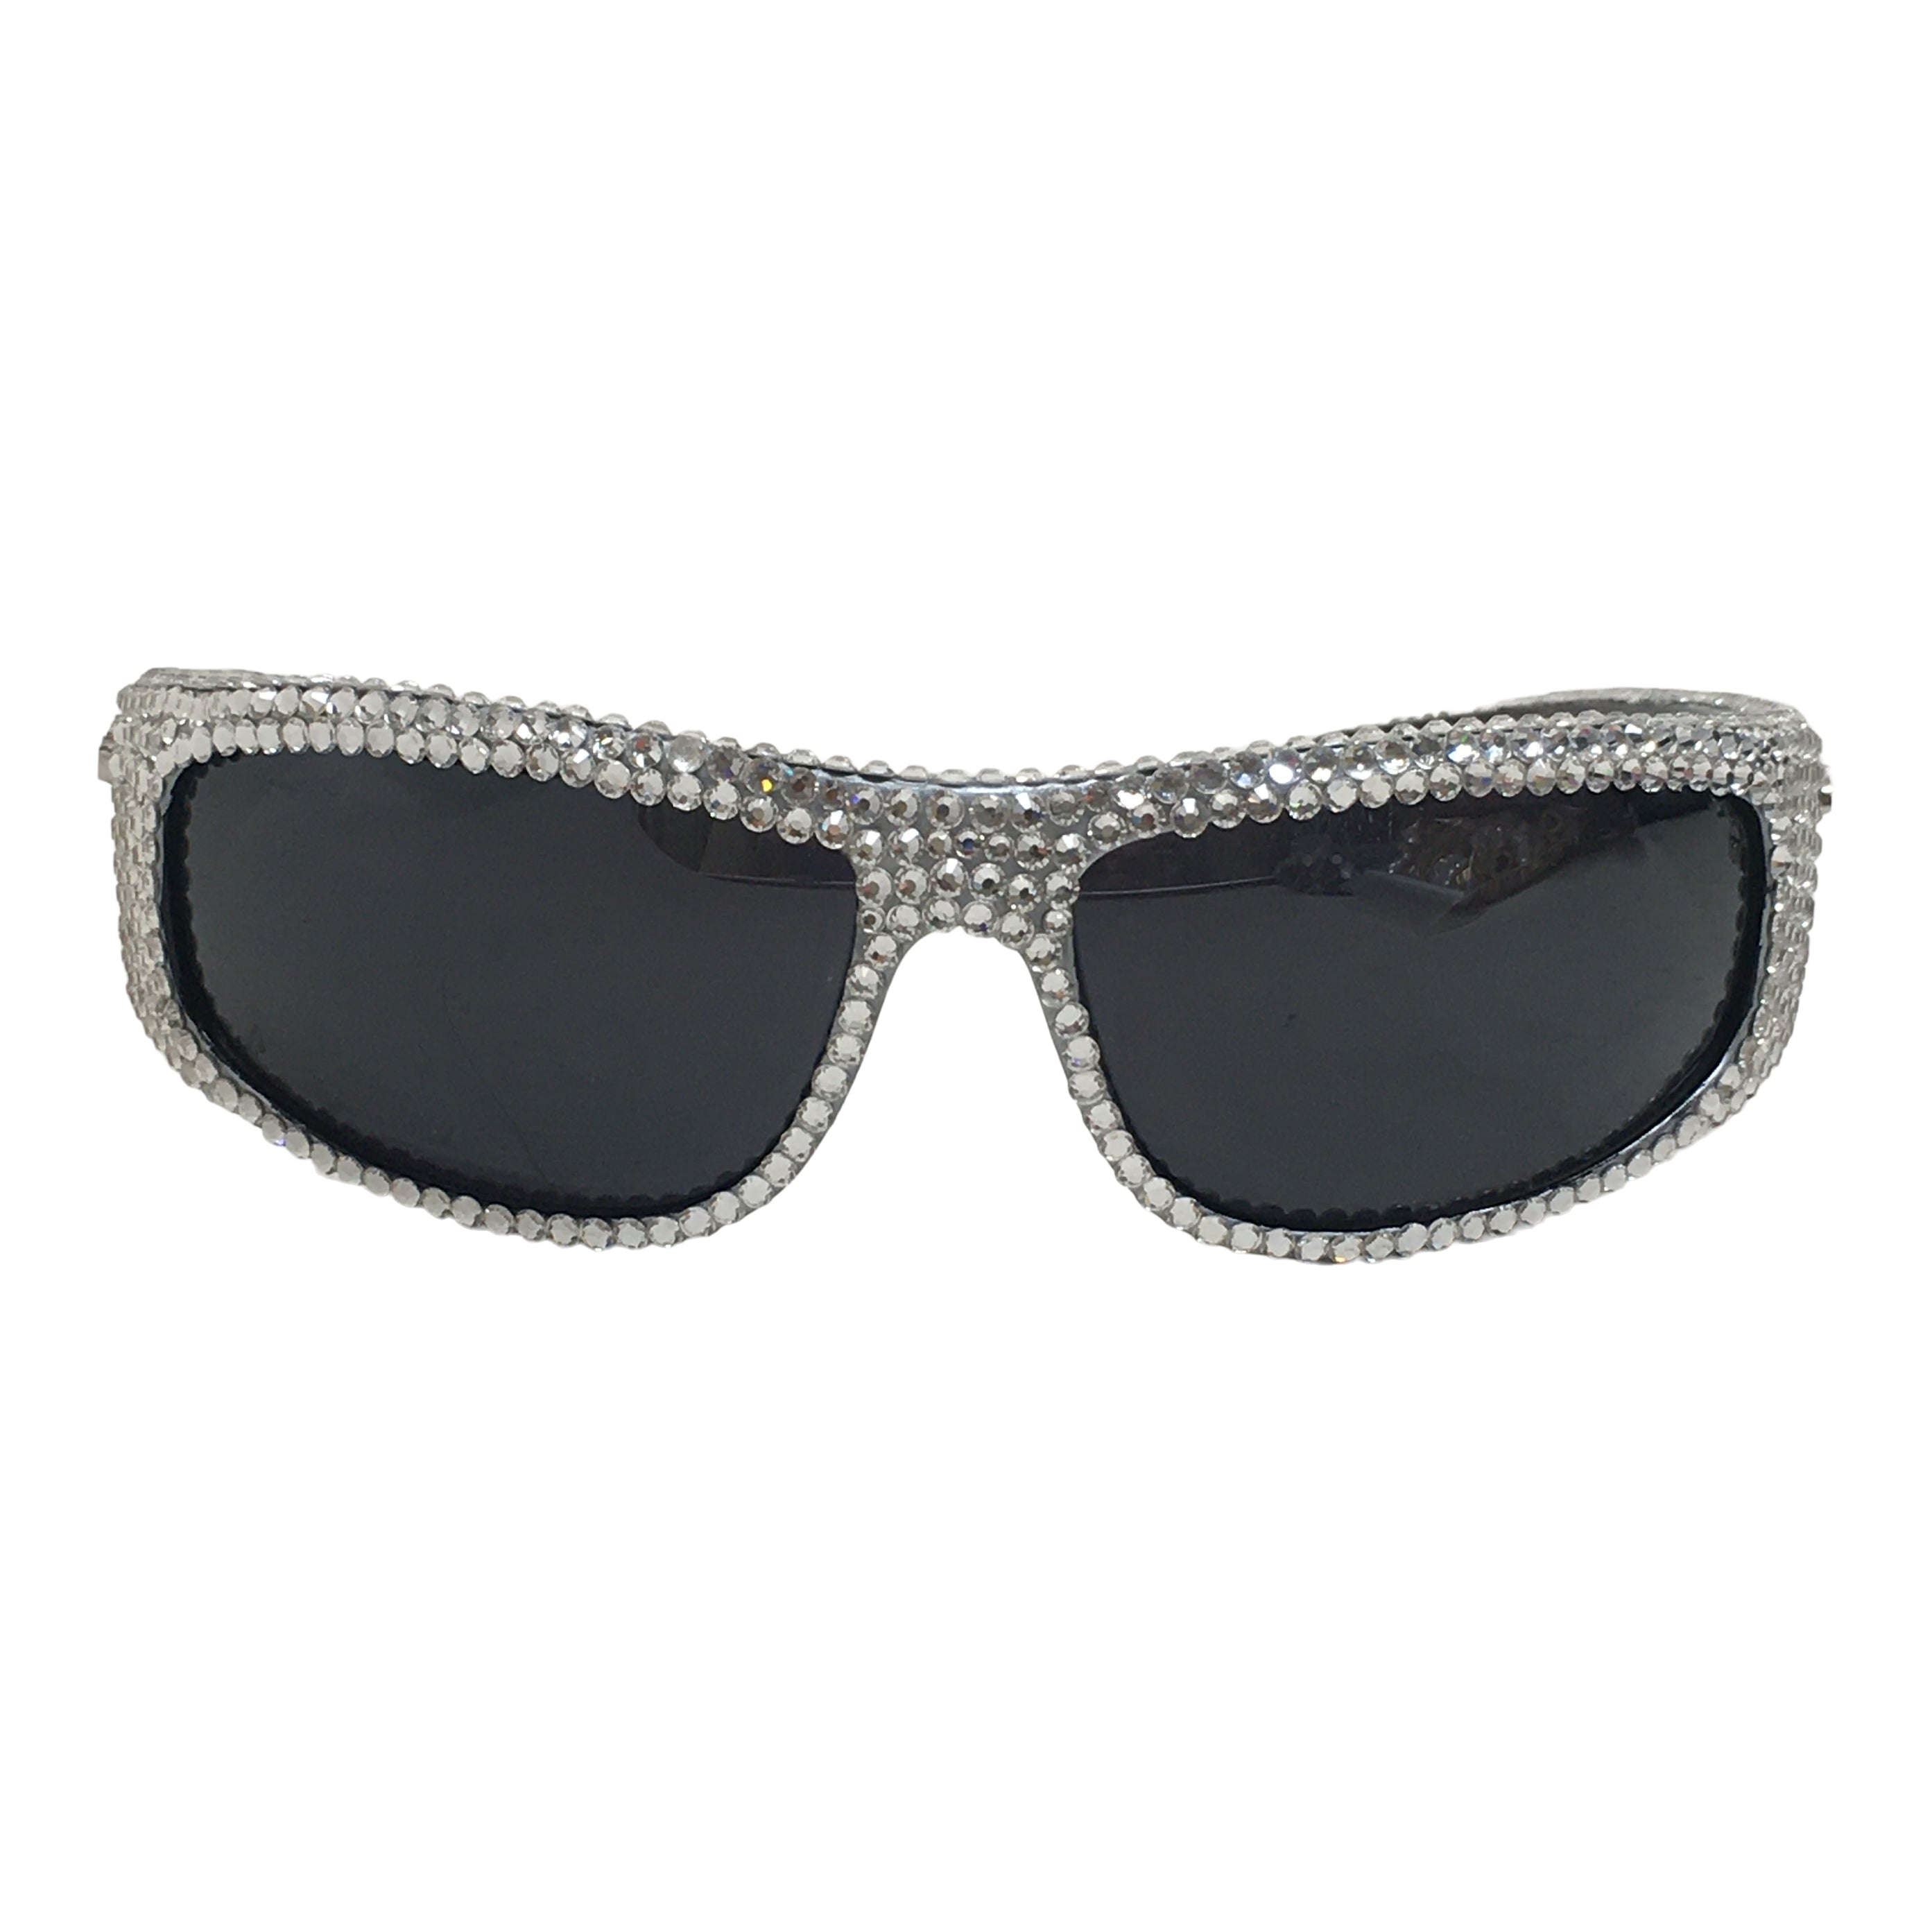 CHANEL Swarovski Crystal CC Logo Sunglasses 5134 B 24810